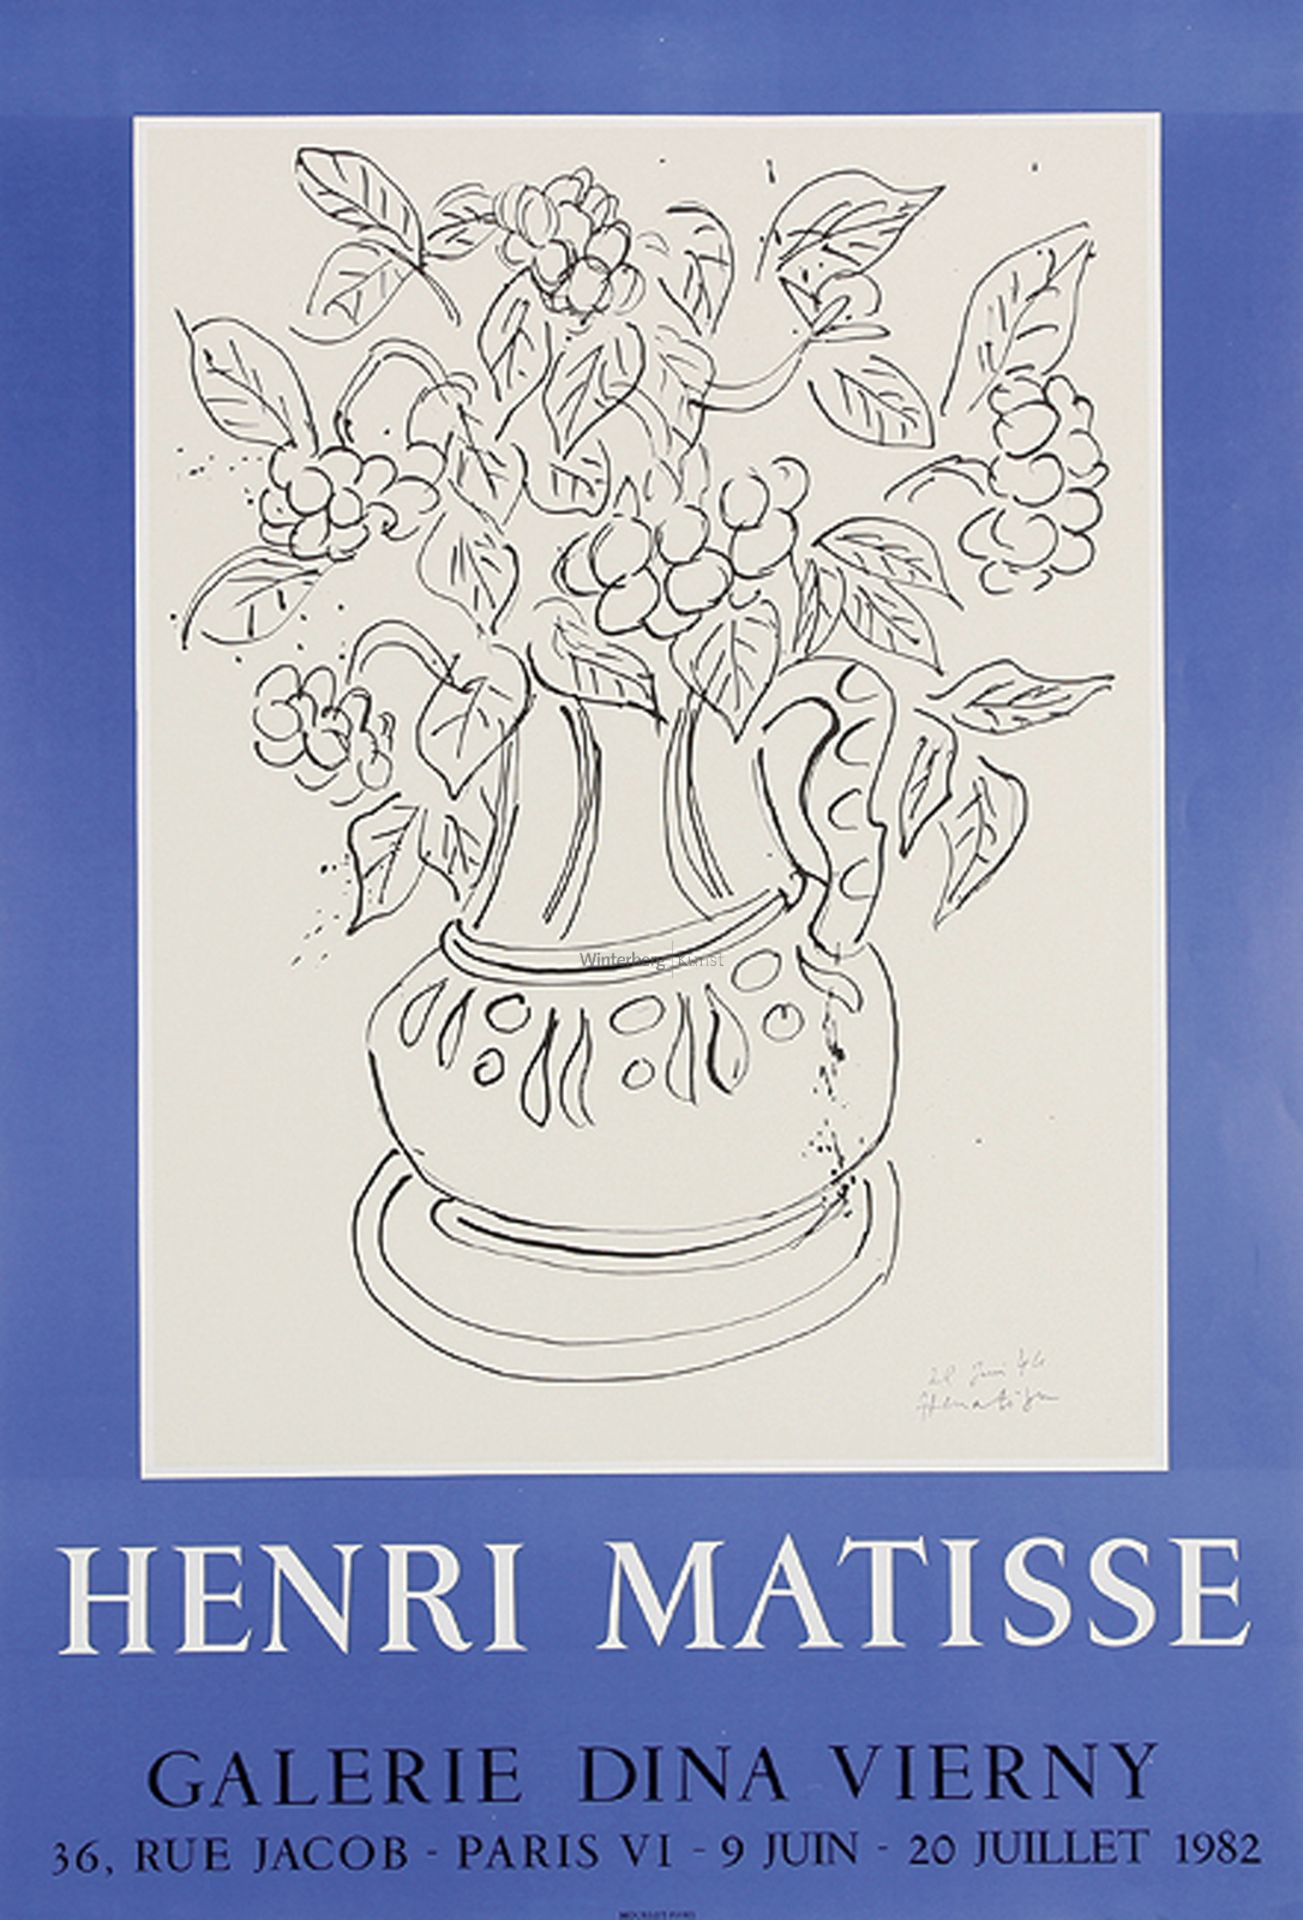 HENRI MATISSE: Henri Matisse.